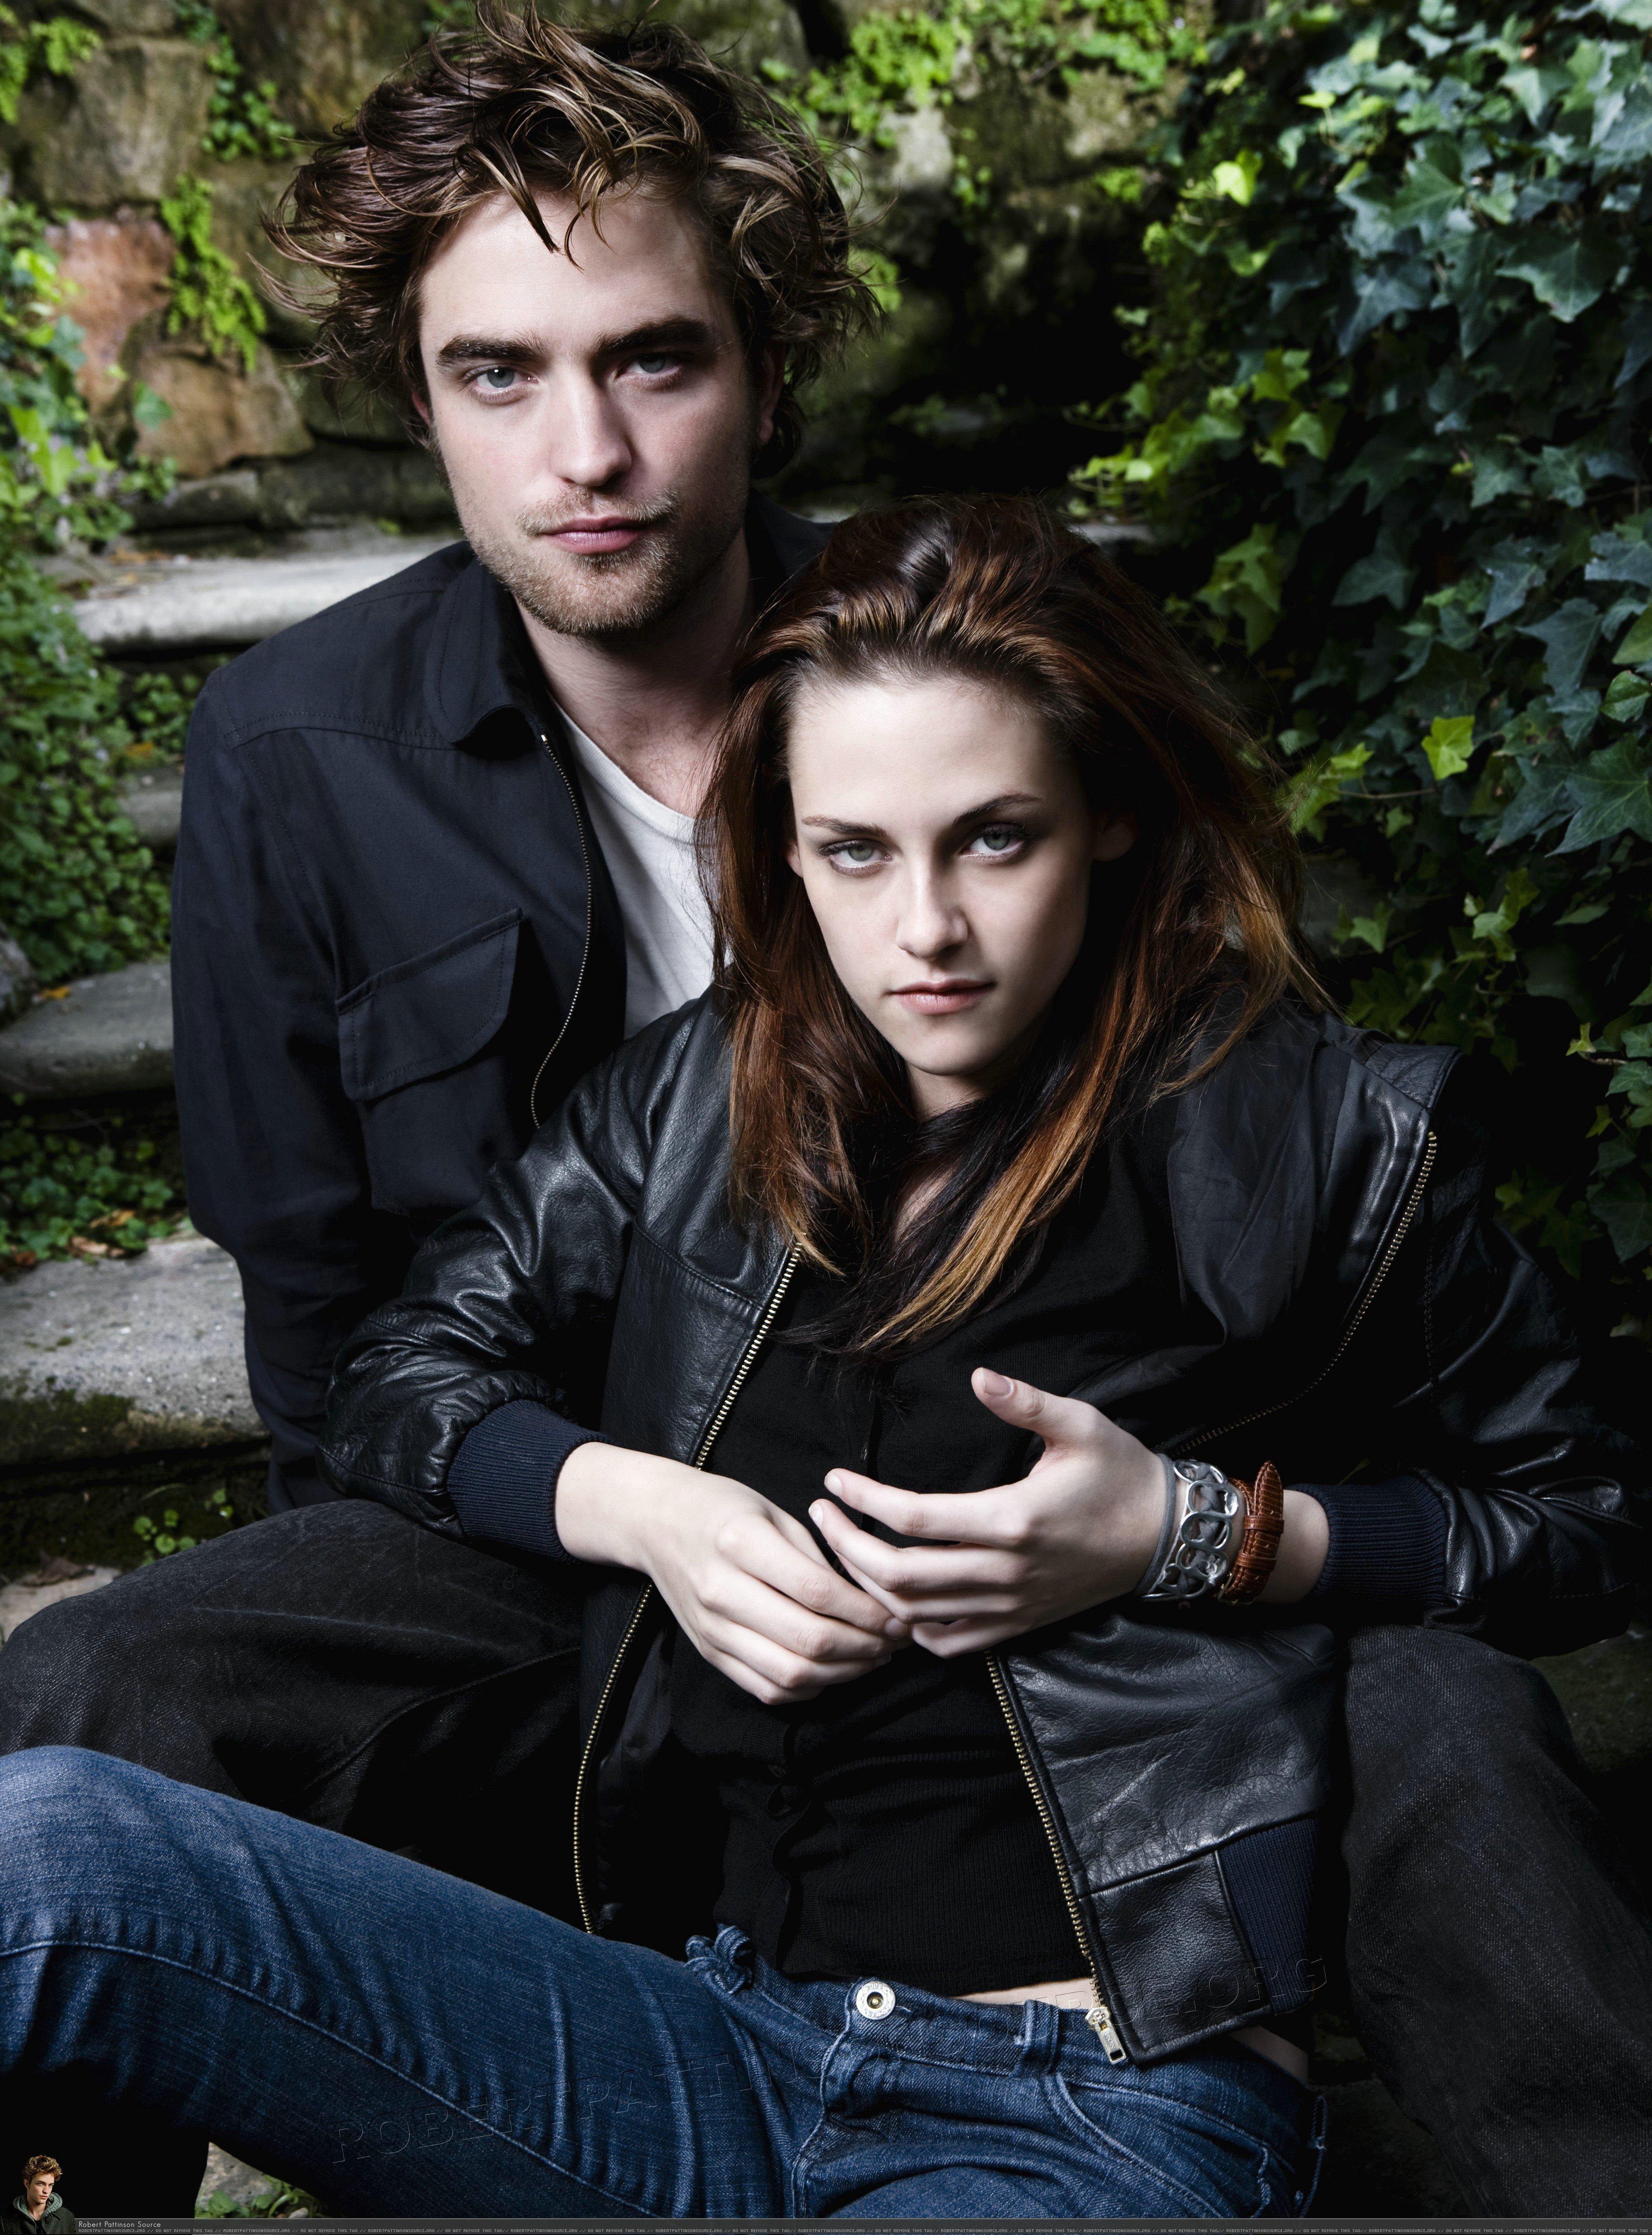 old photohoot pics of Robert Pattinson and Kristen Stewart now